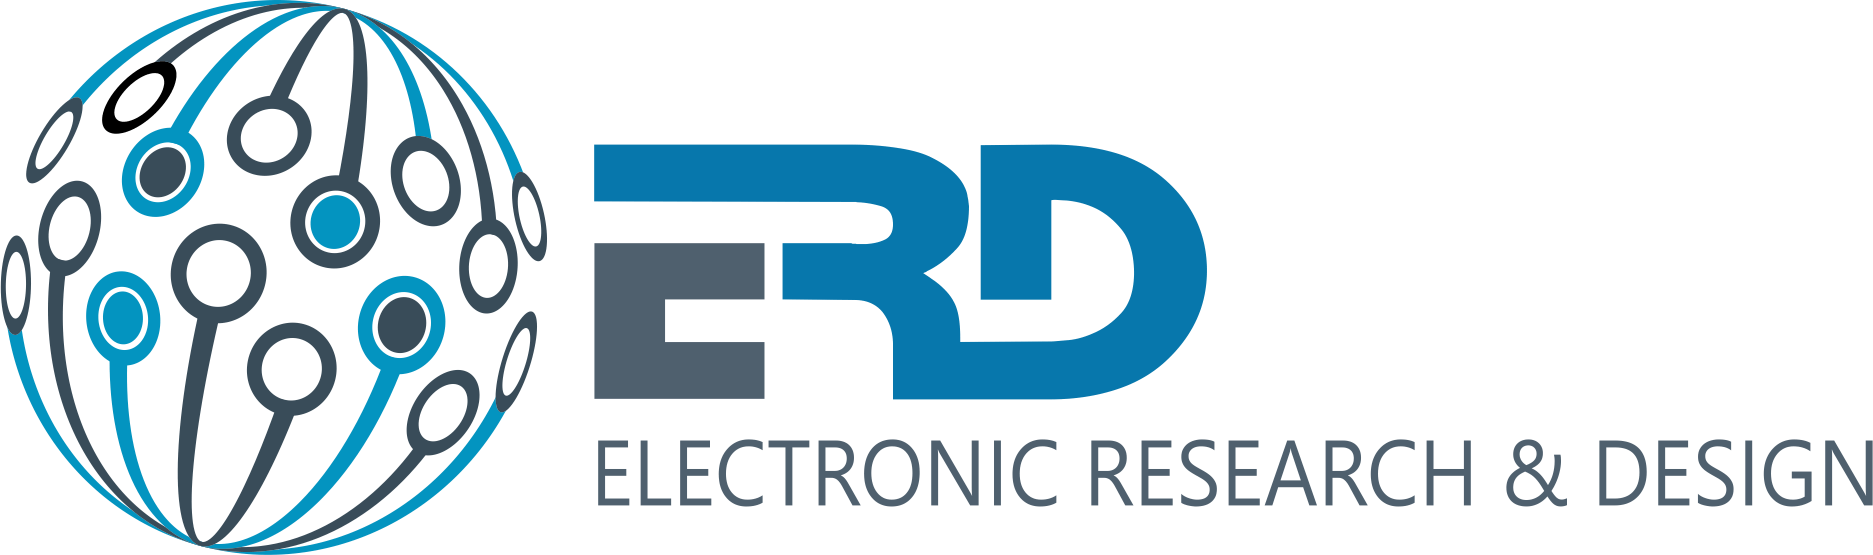 ERD Logo - ERD | Electronic Research and Design